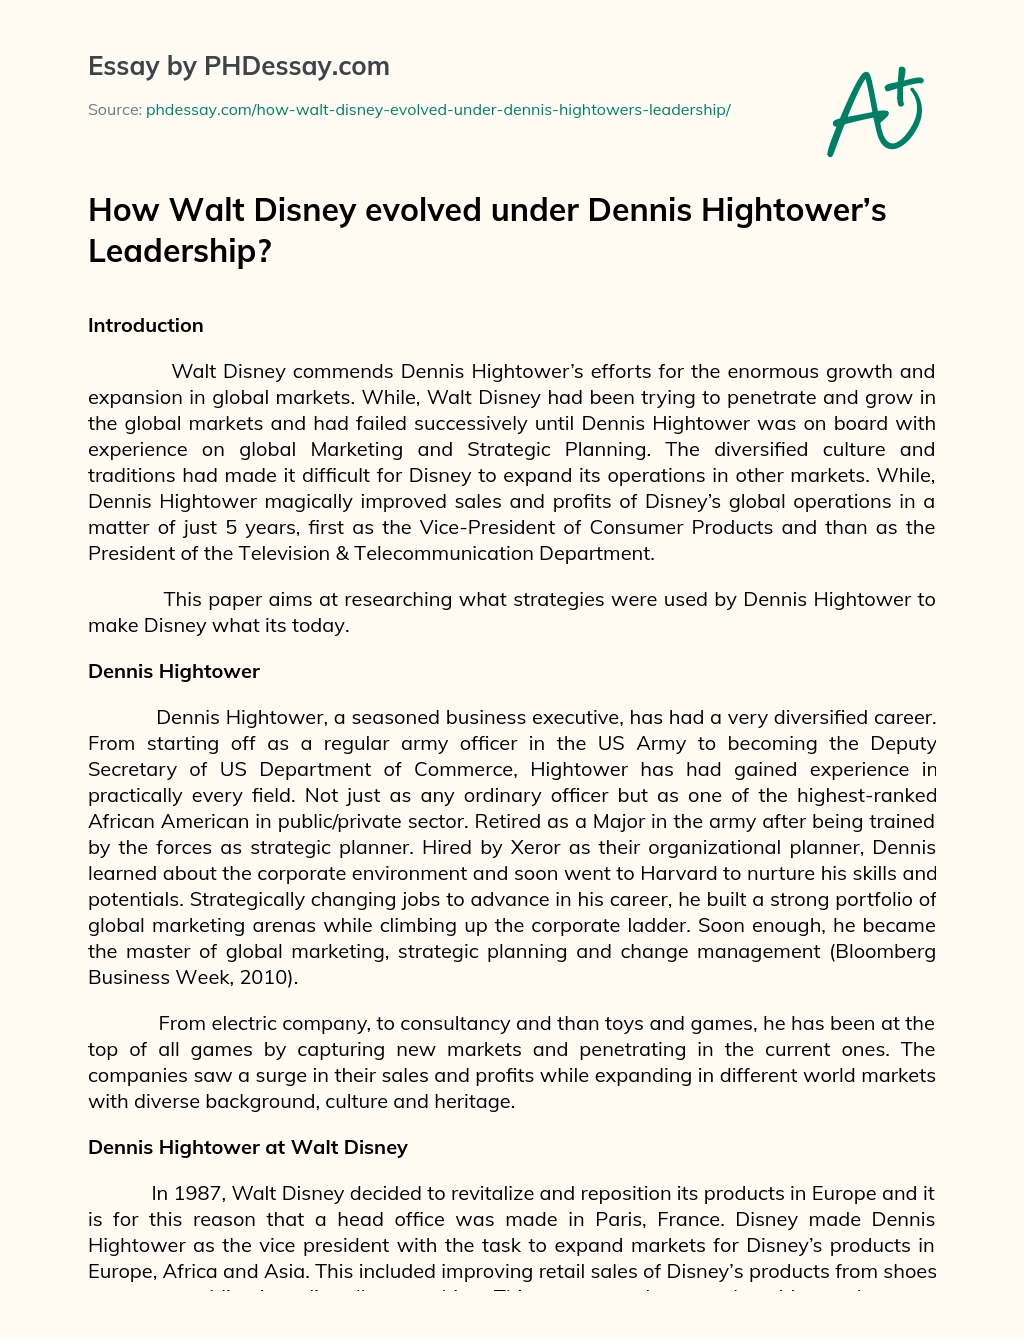 How Walt Disney evolved under Dennis Hightower’s Leadership? essay